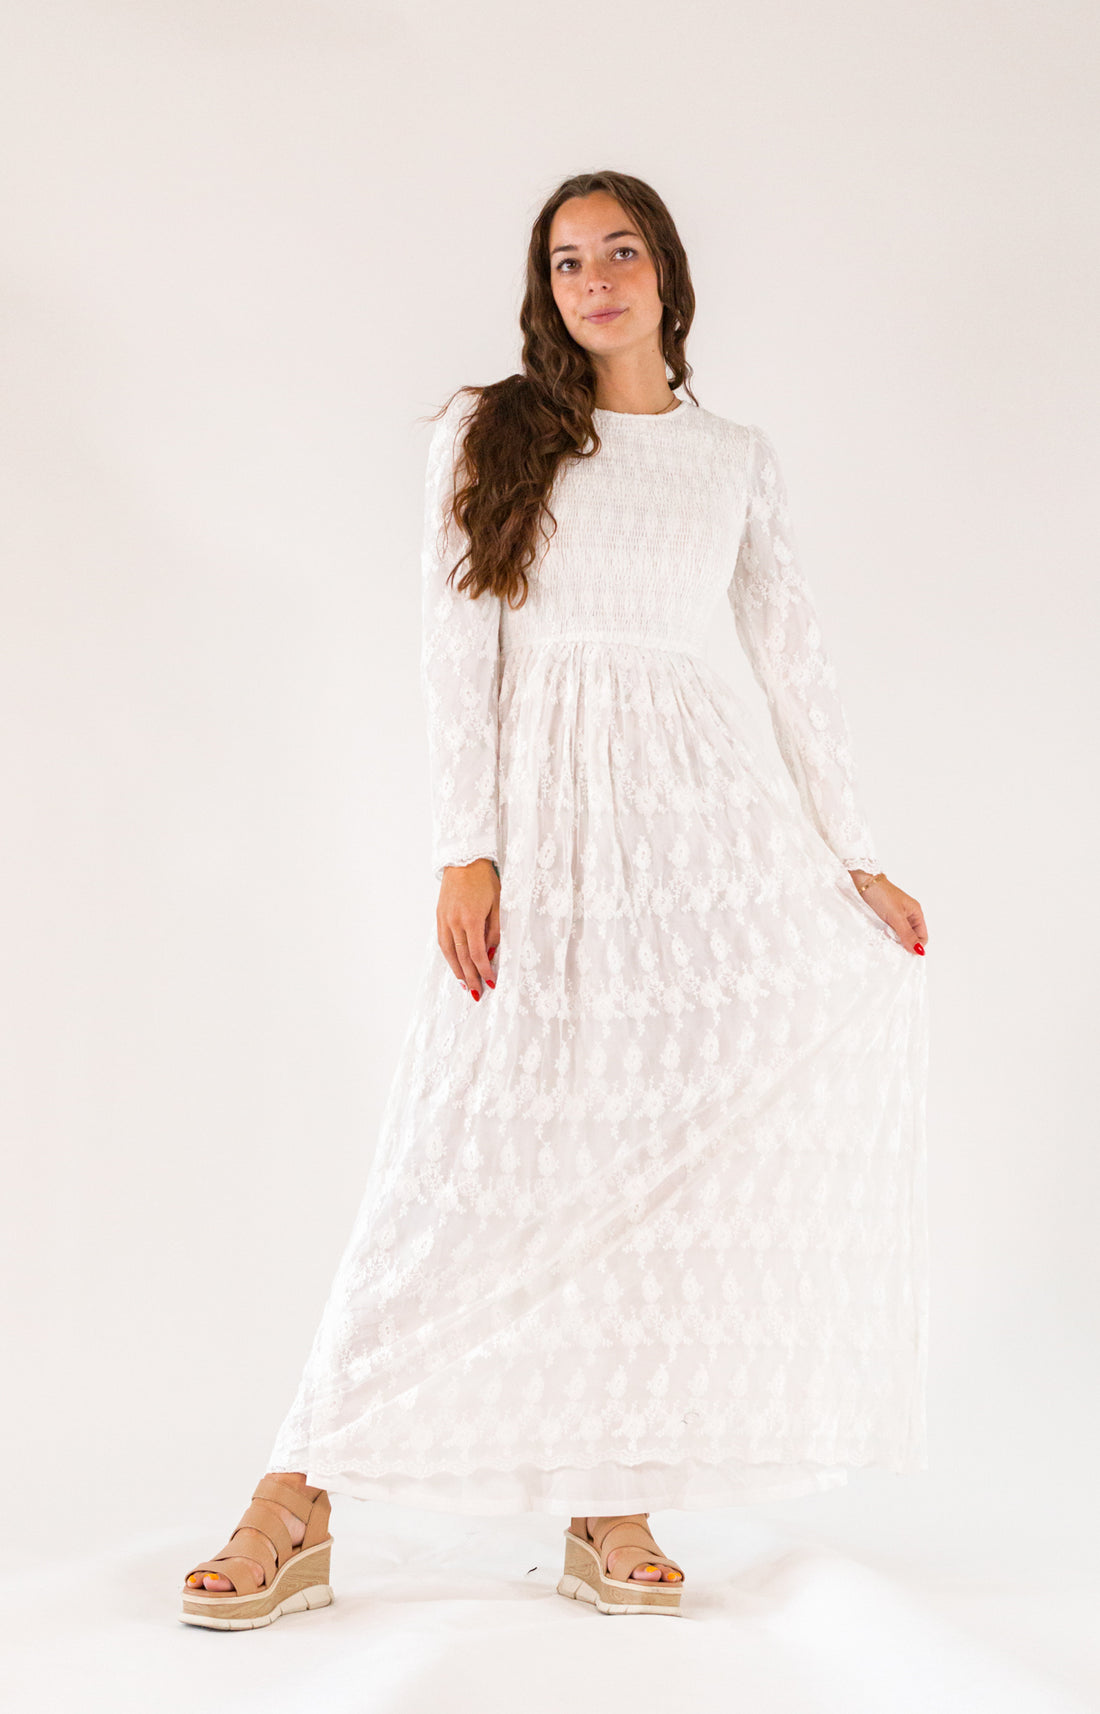 Sunrise White Dress